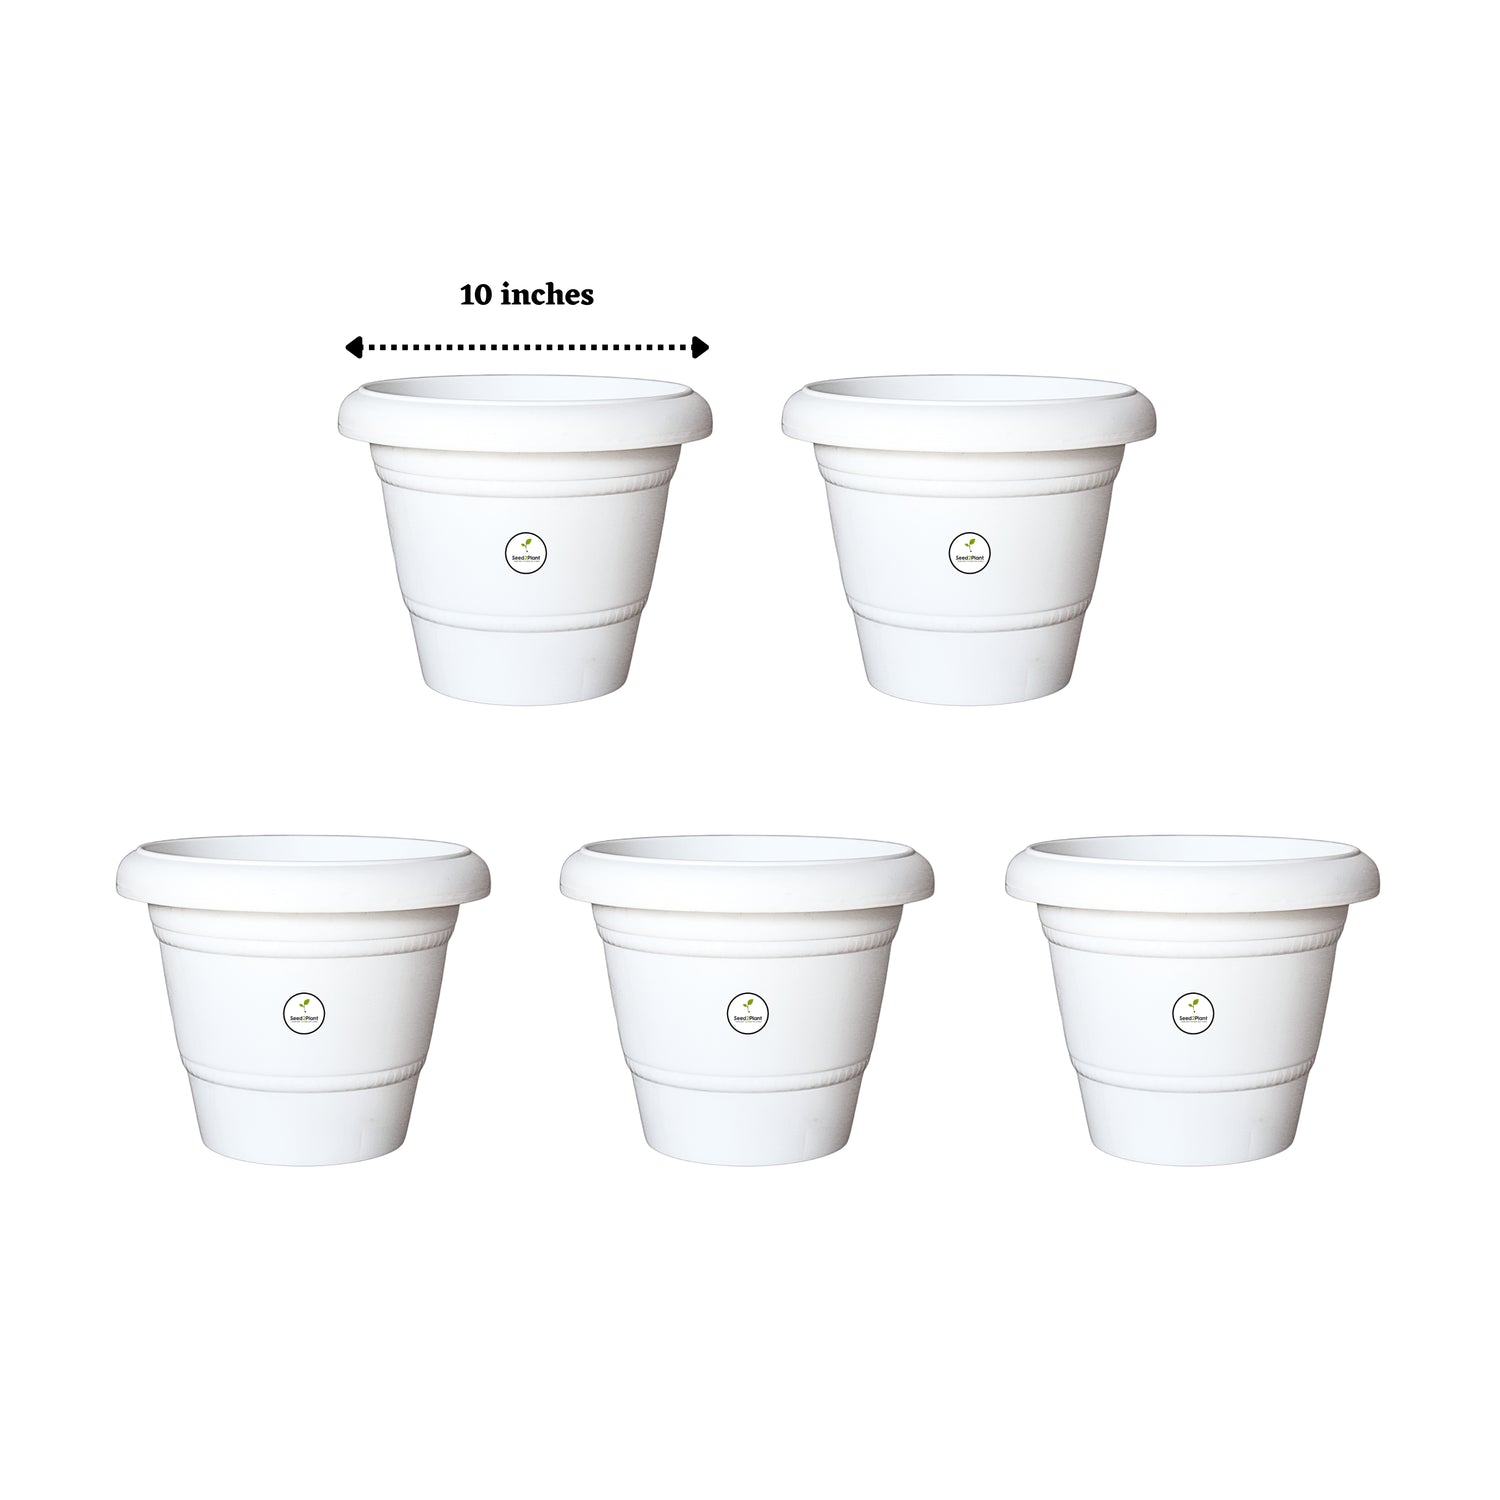 10 Inch Plastic Pots UV Treated - White Colour